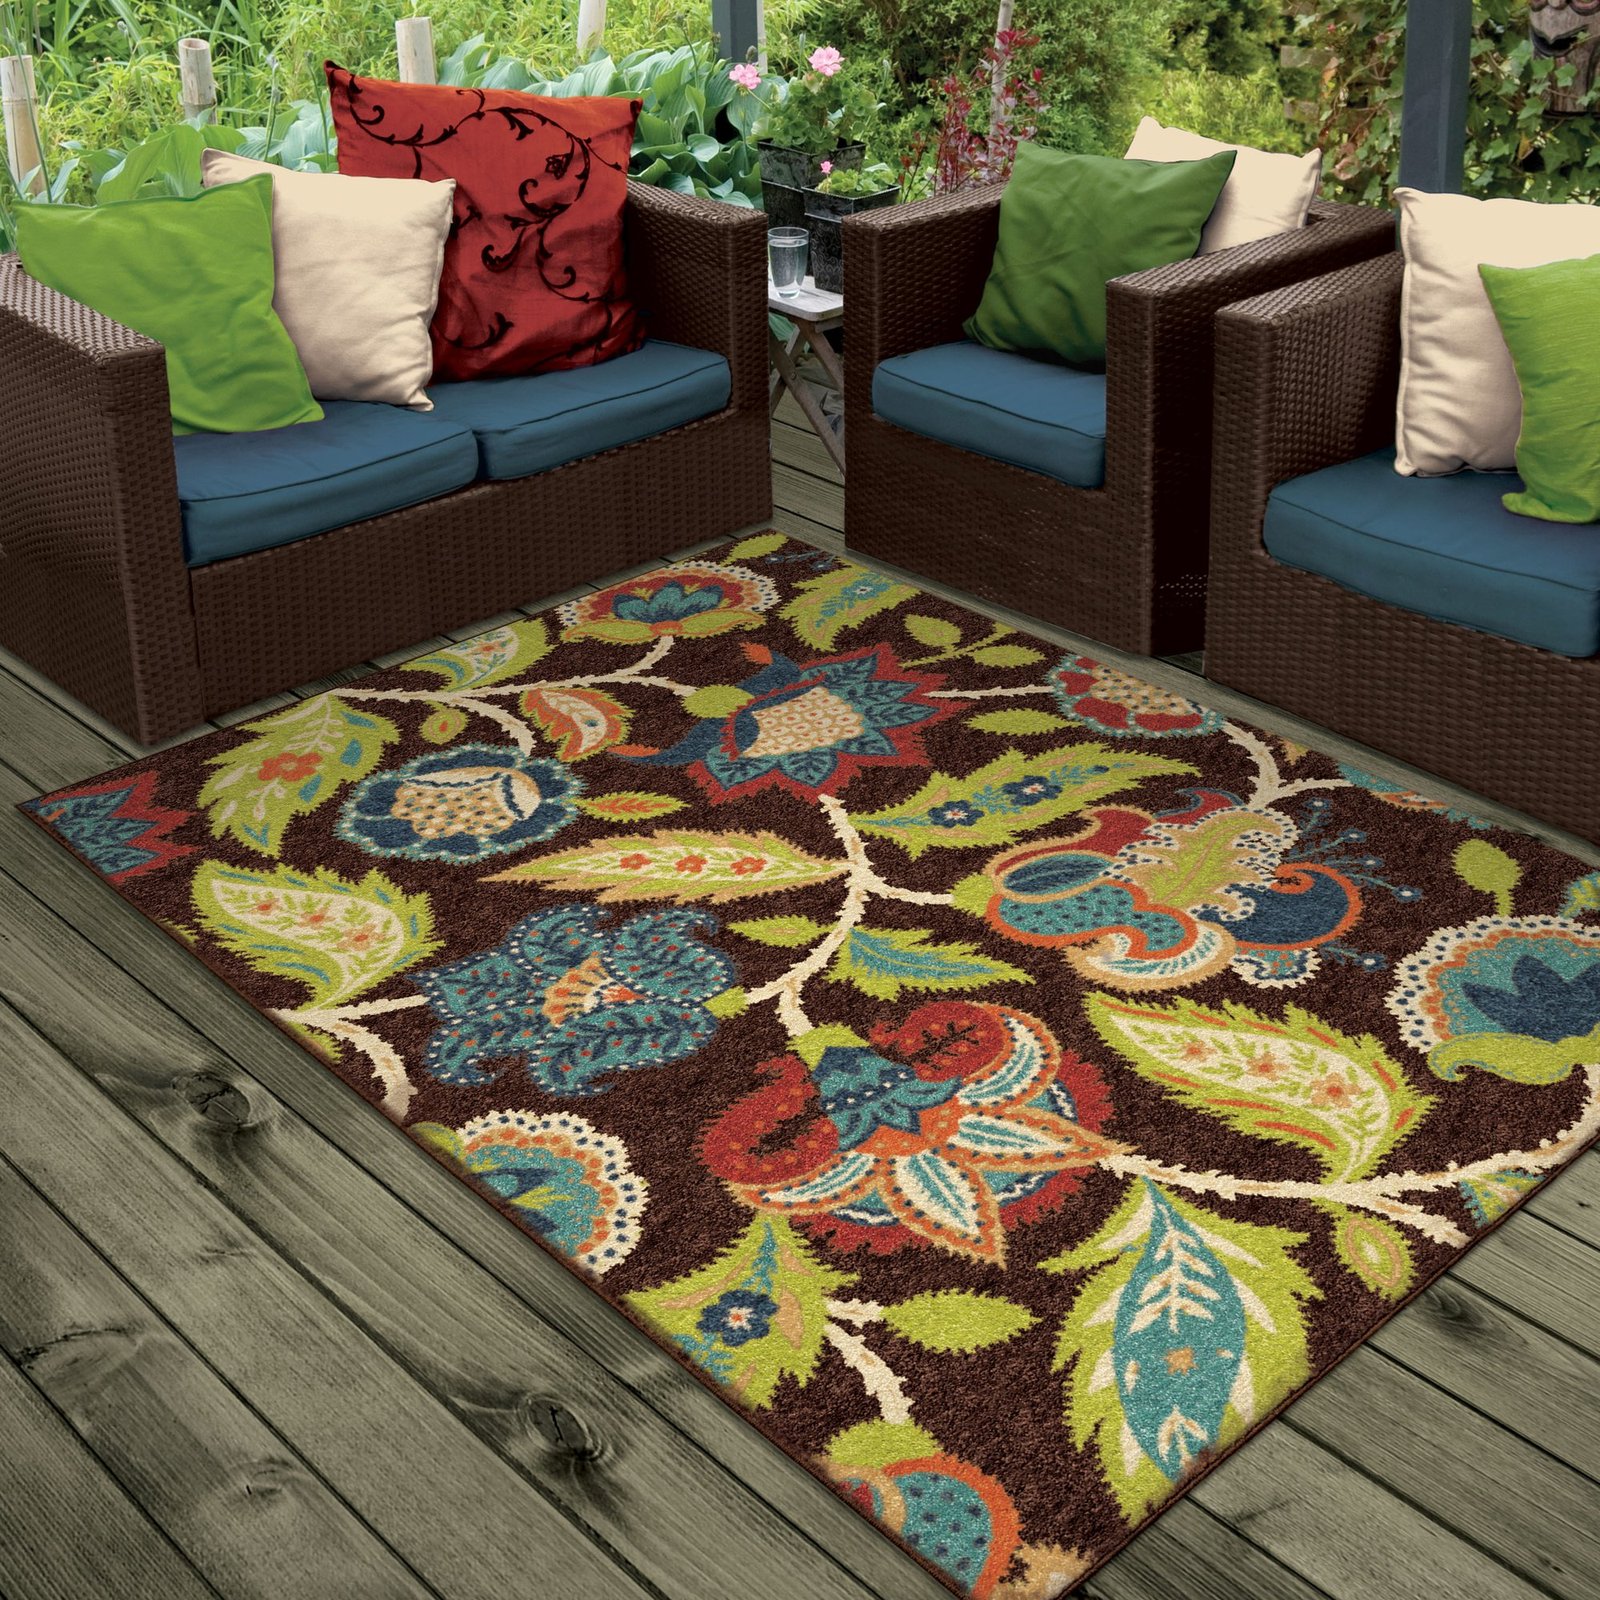 outdoor carpets in dubai